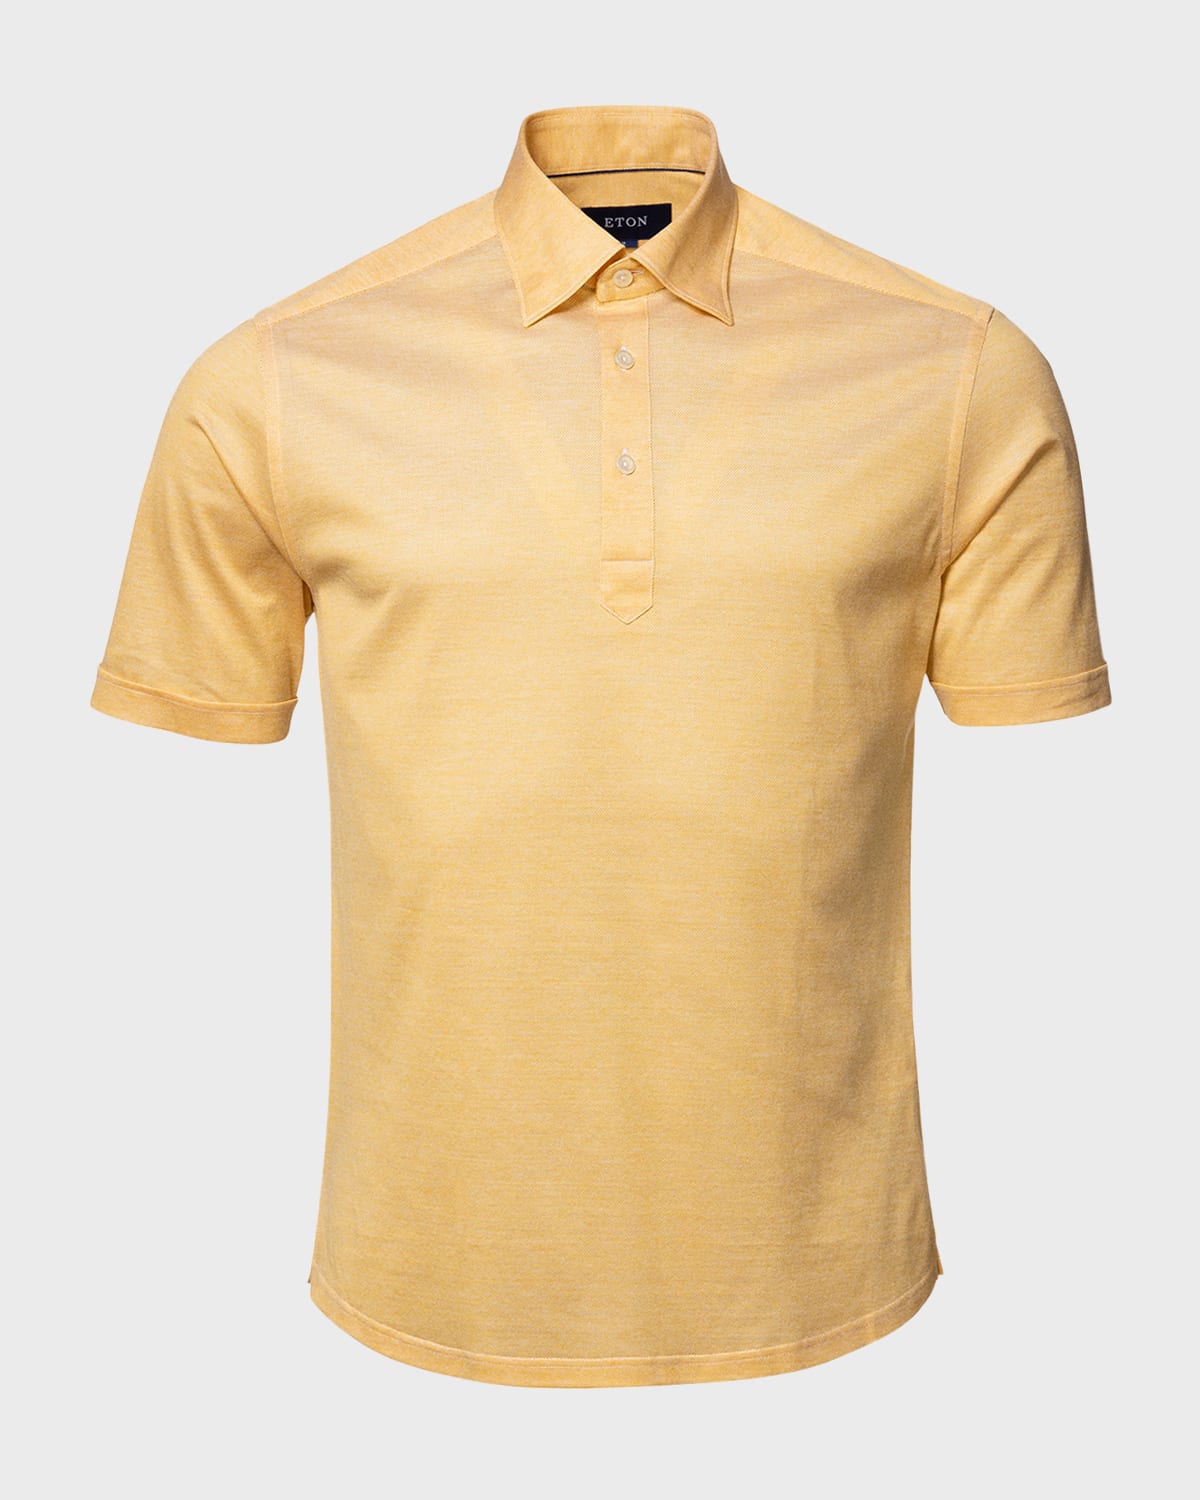 Eton Men's Contemporary Fit Cotton Piqué Polo Shirt